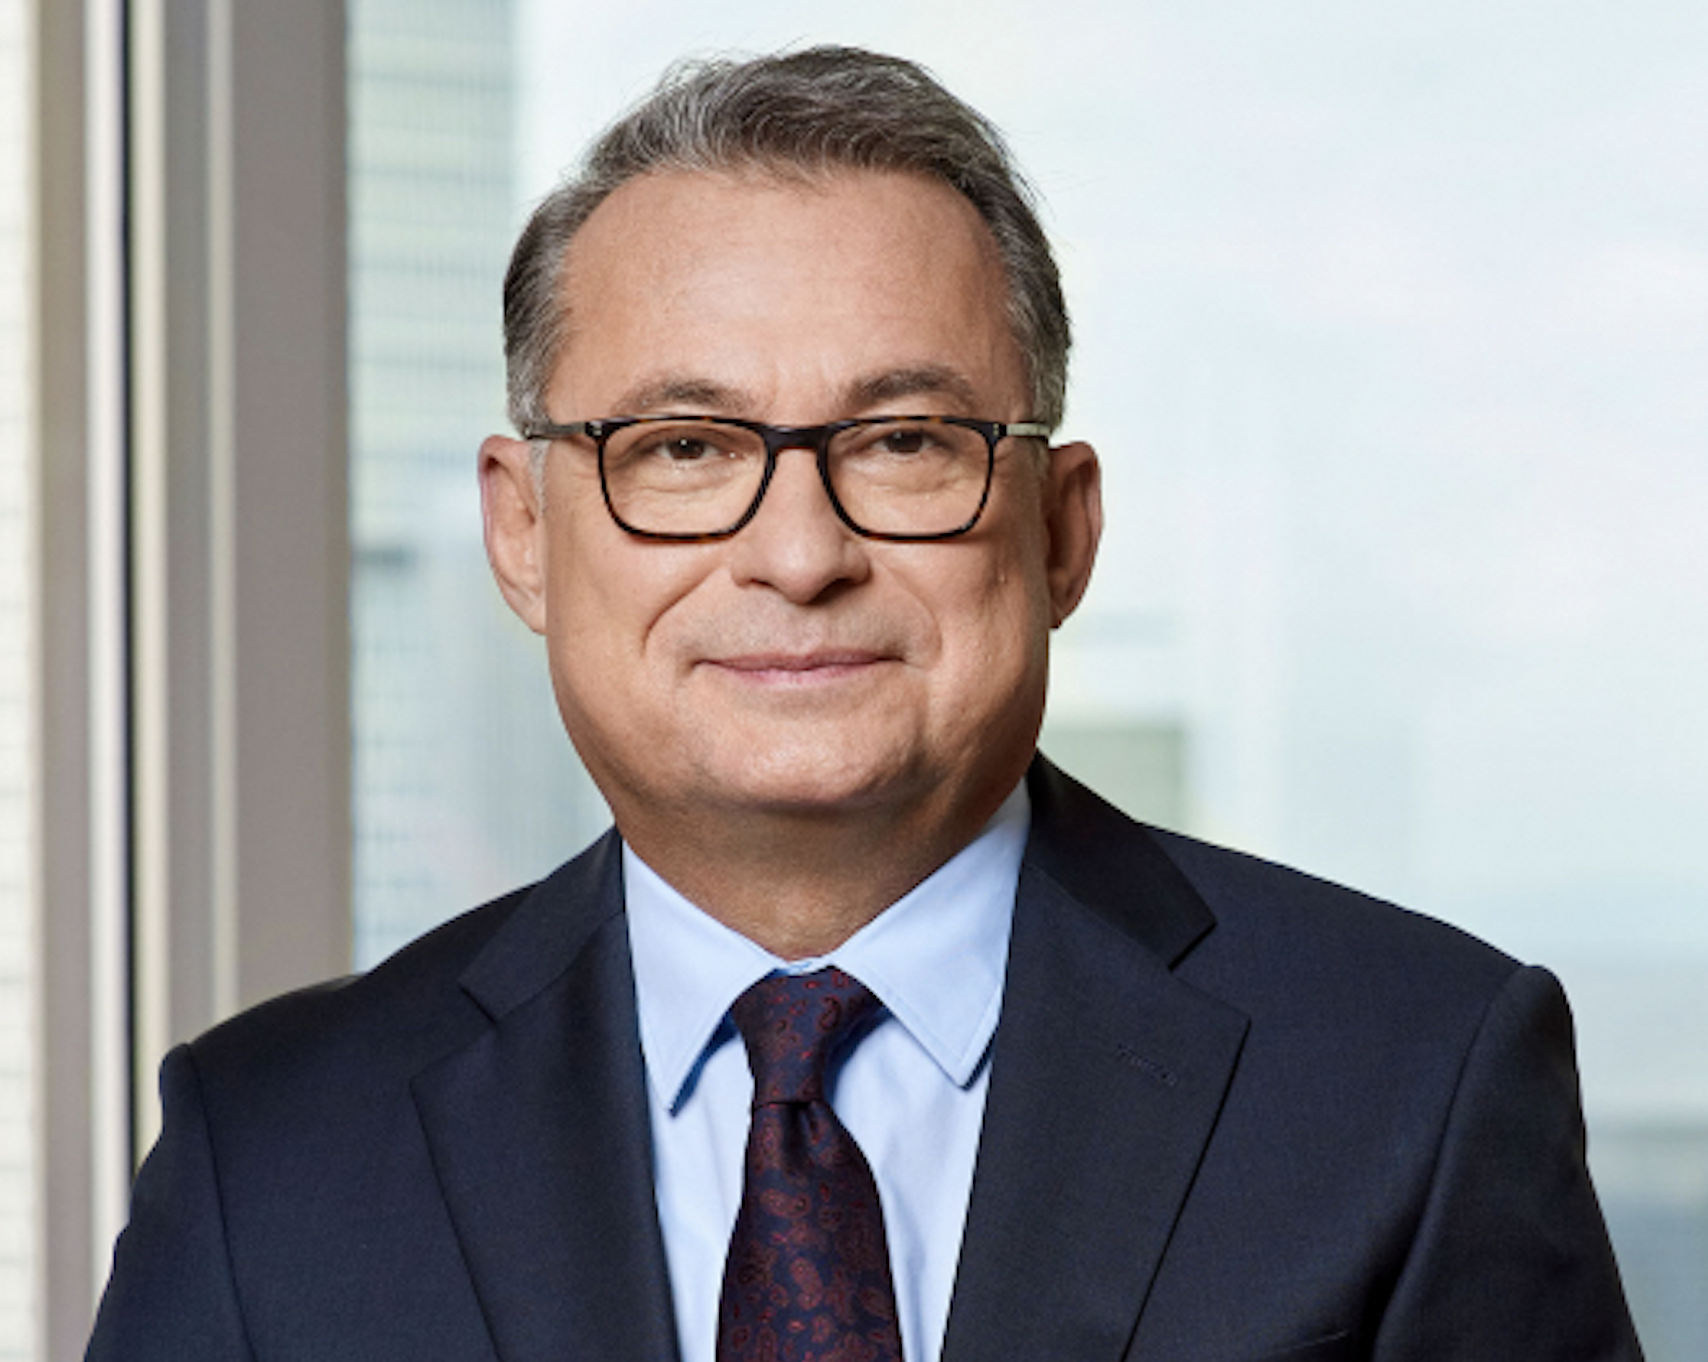 The President of the Deutsche Bundesbank joins the Advisory Board of the Osservatorio Permanente Giovani-Editori